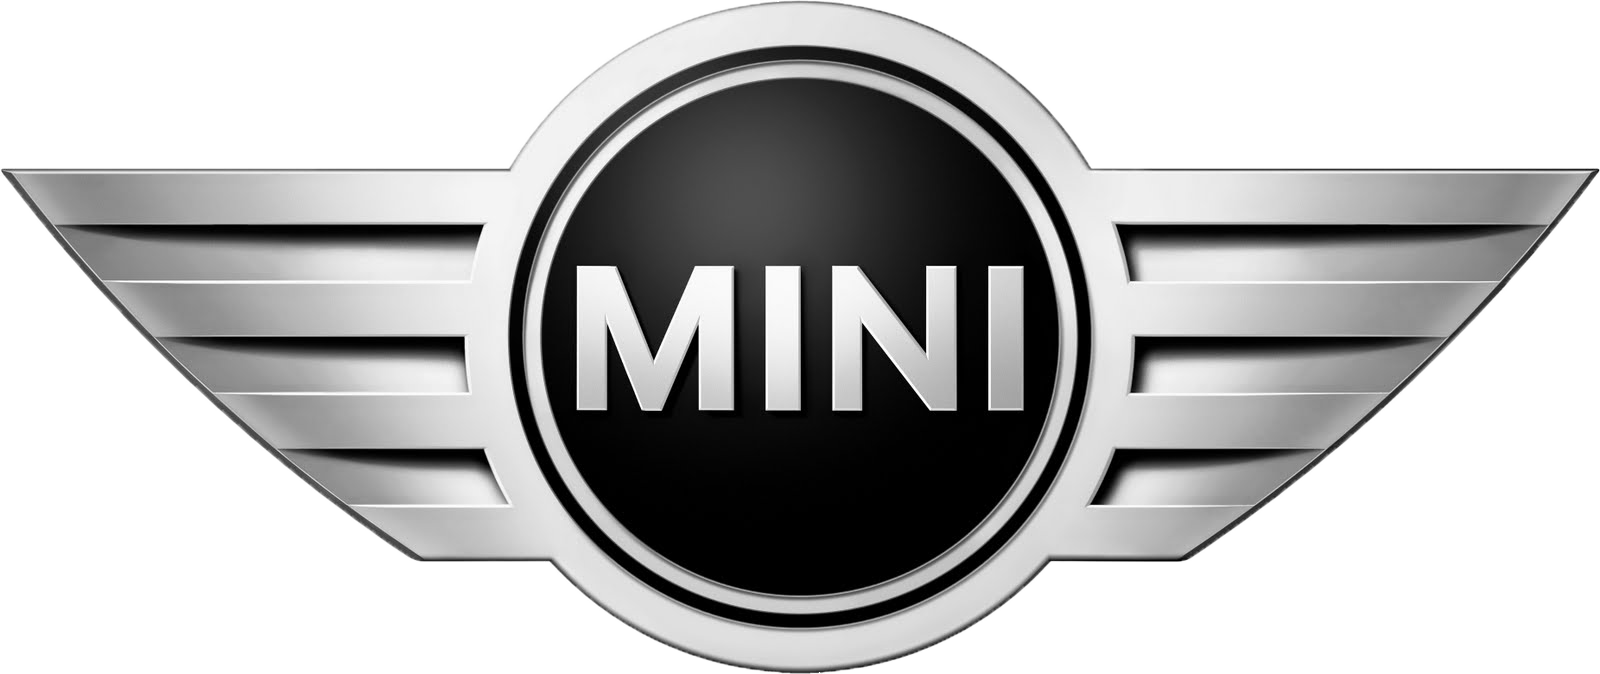 MINI car logo PNG brand image